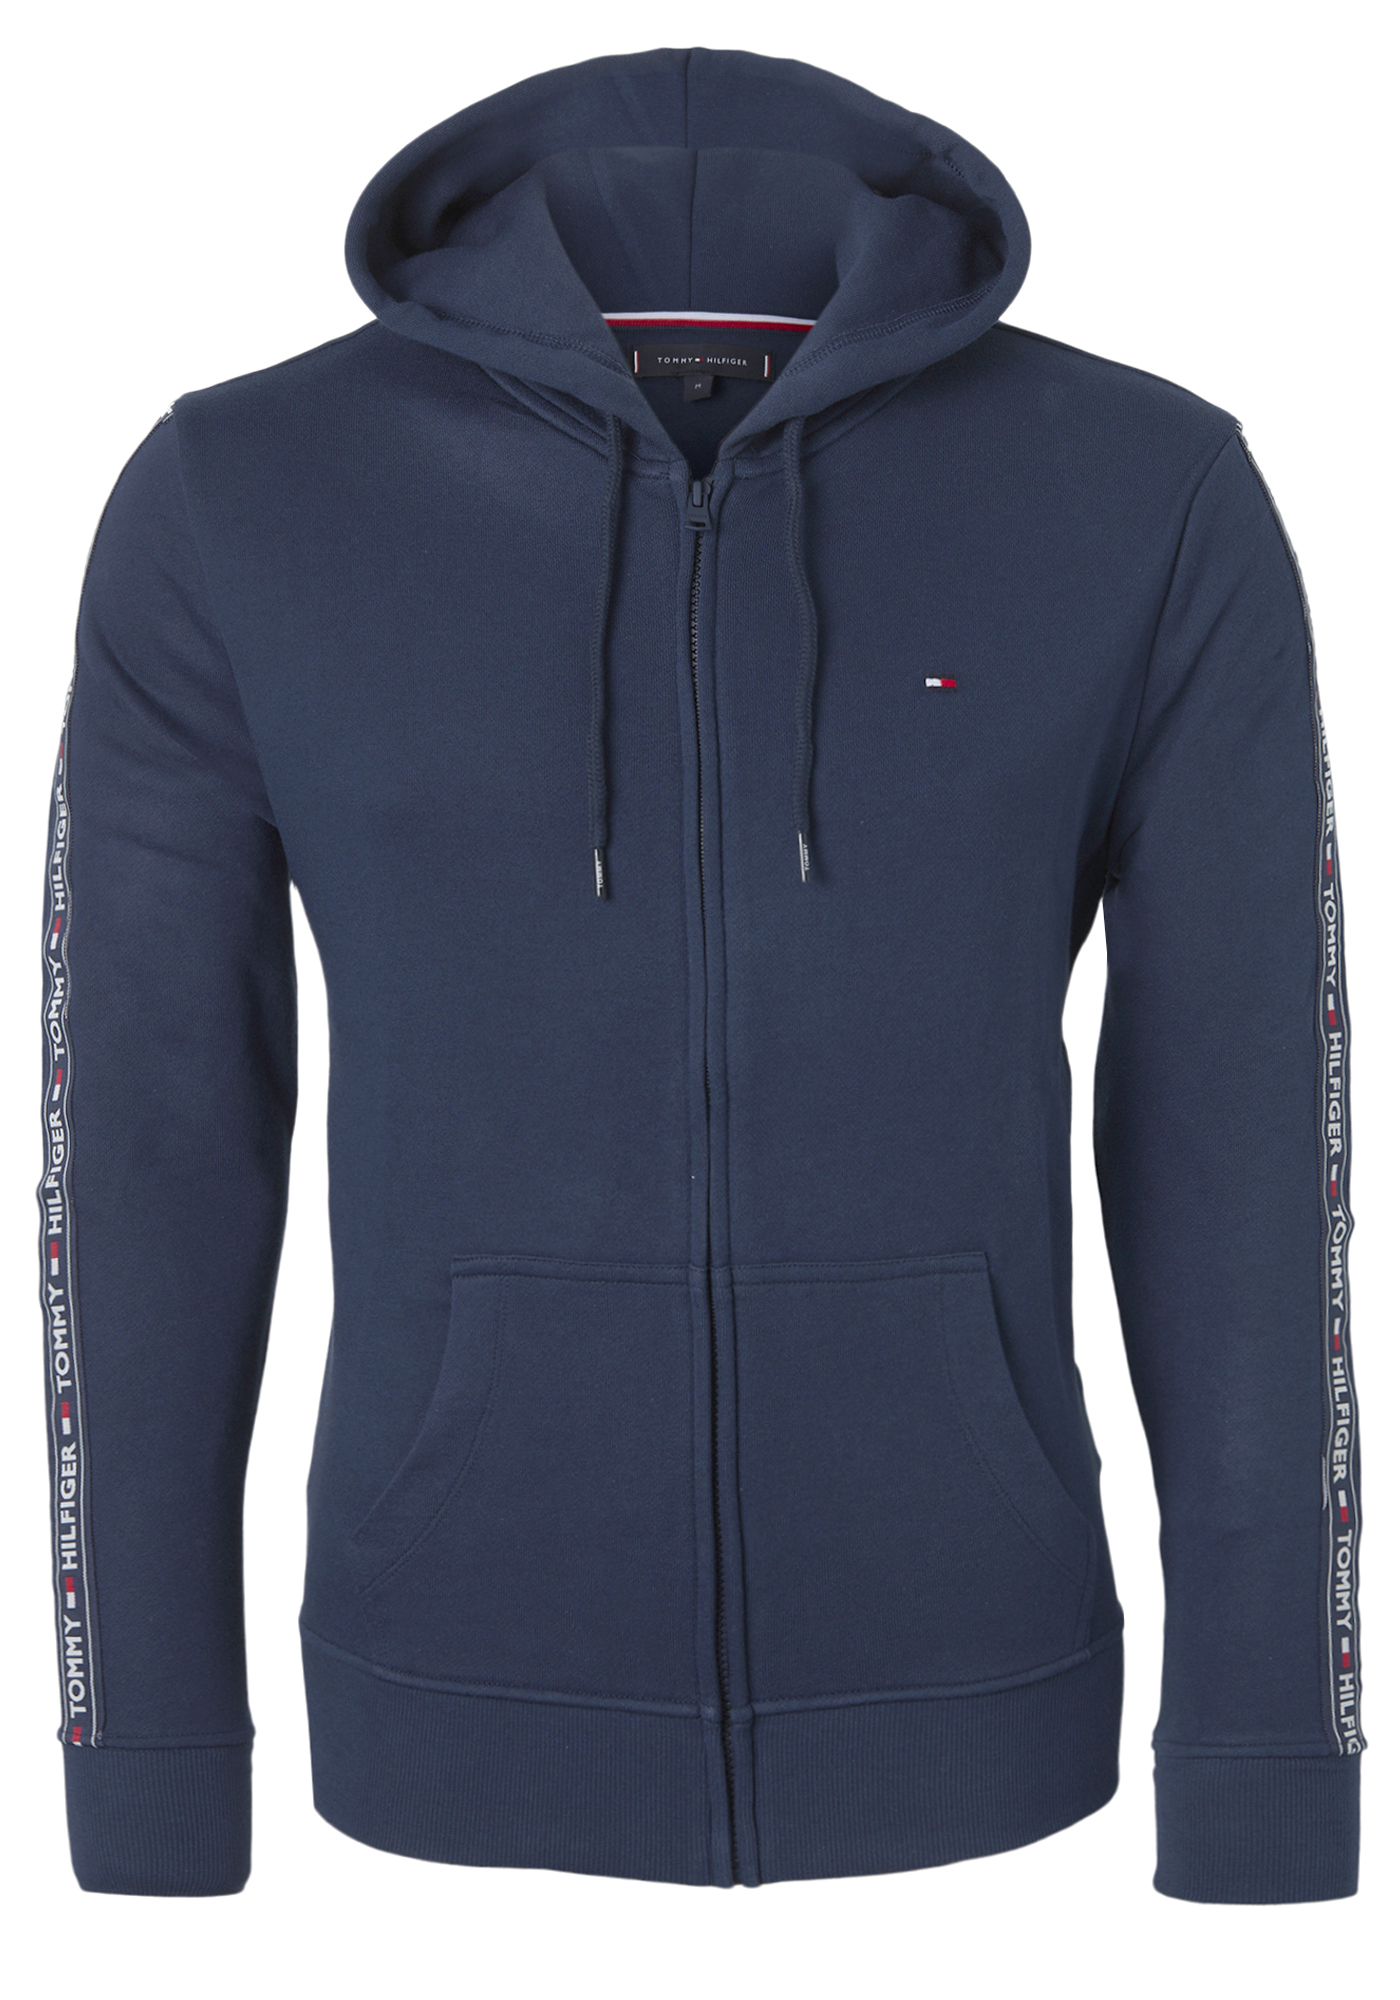 blik Shetland Decimale Tommy Hilfiger hoodie jacket, heren sweatvest middeldik, blauw - Zomer SALE  tot 50% korting